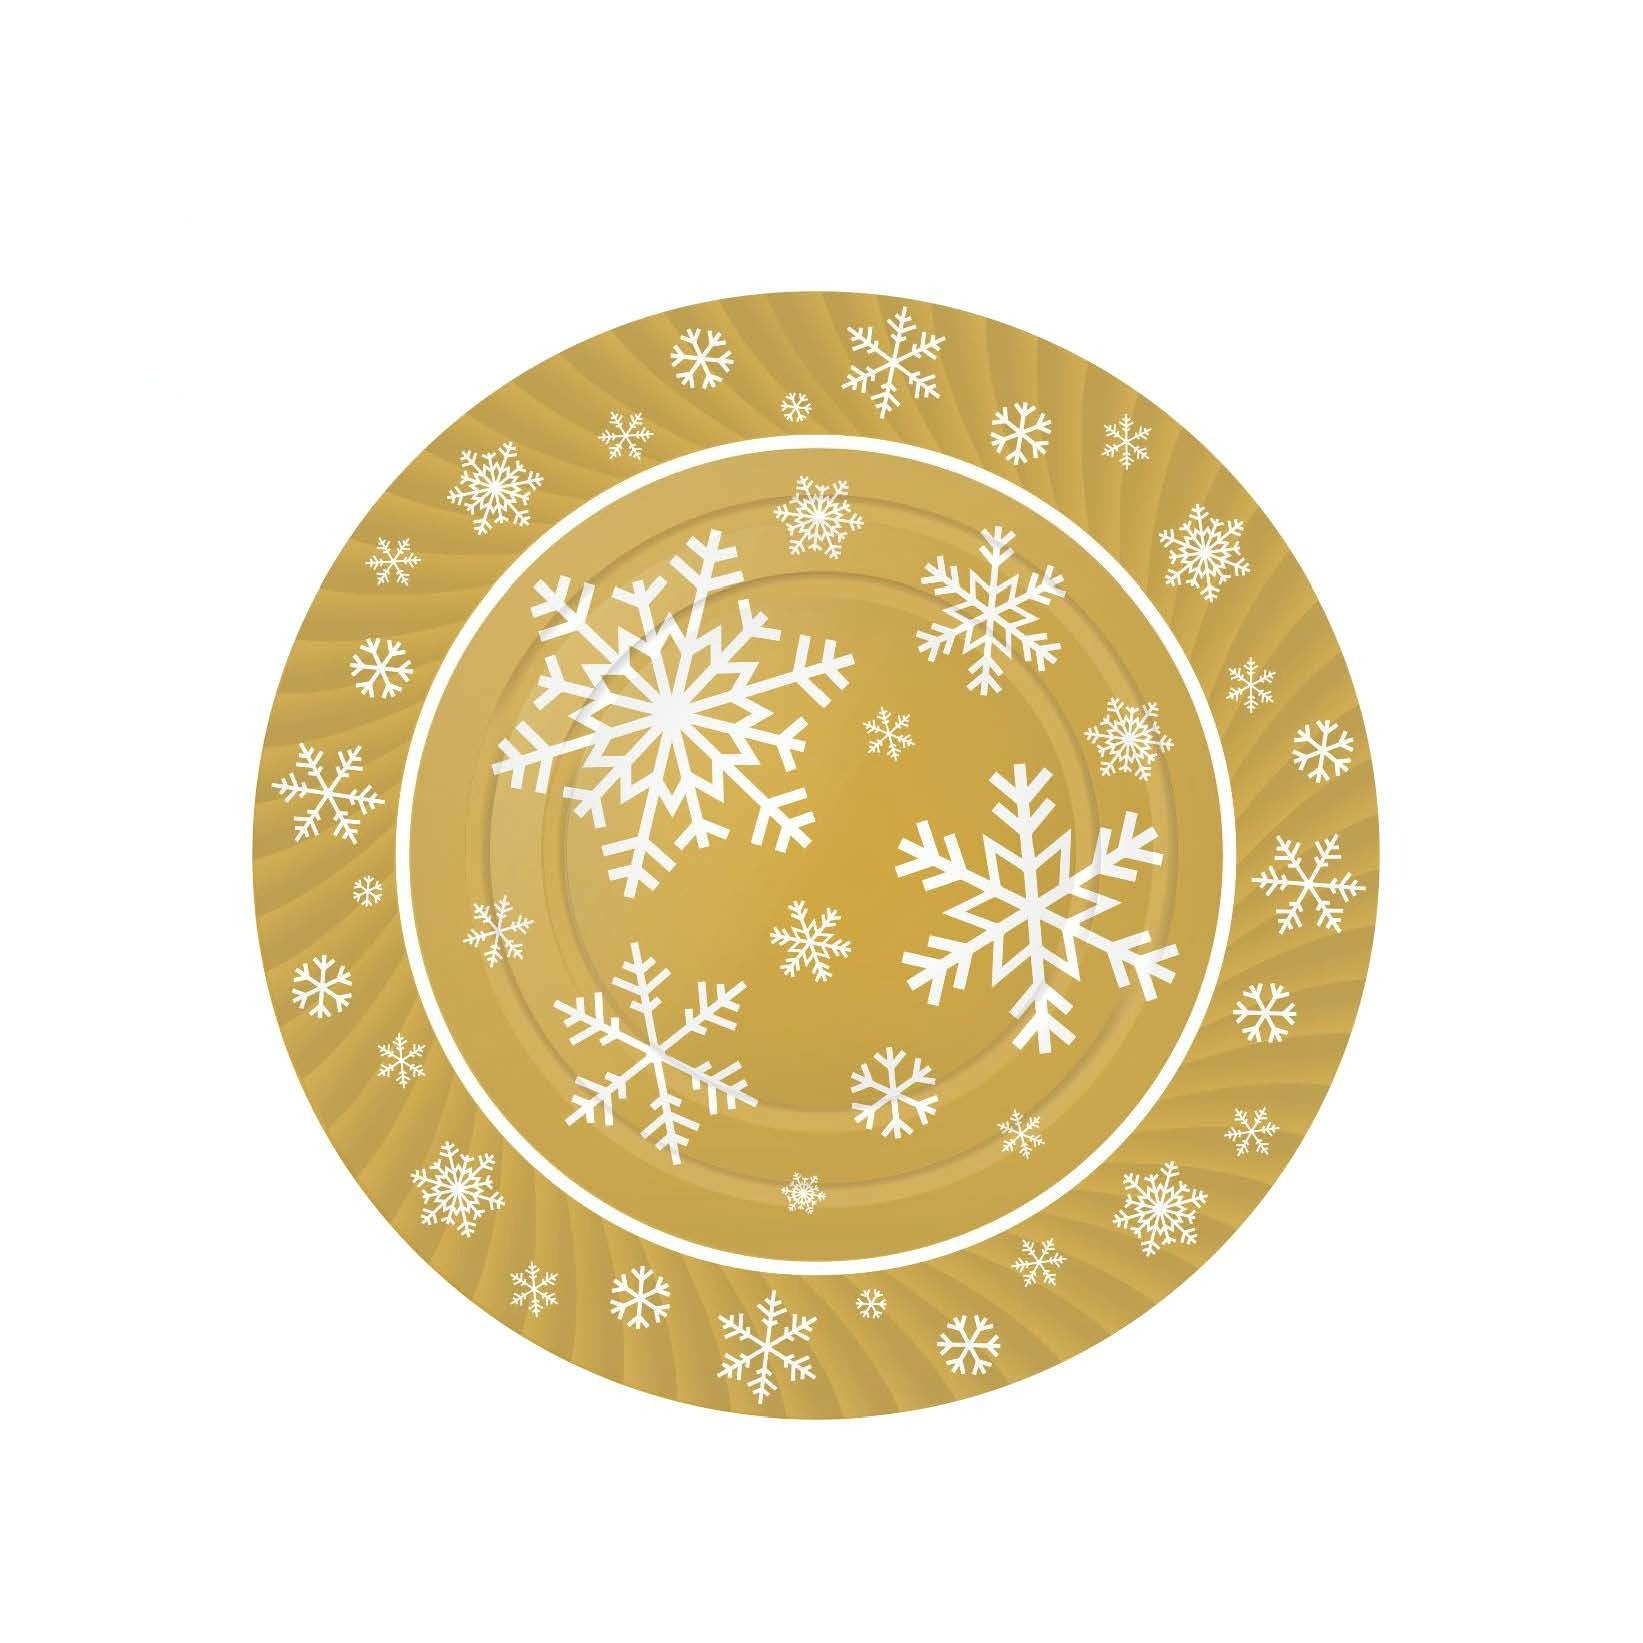 Copo snow -gold round tray